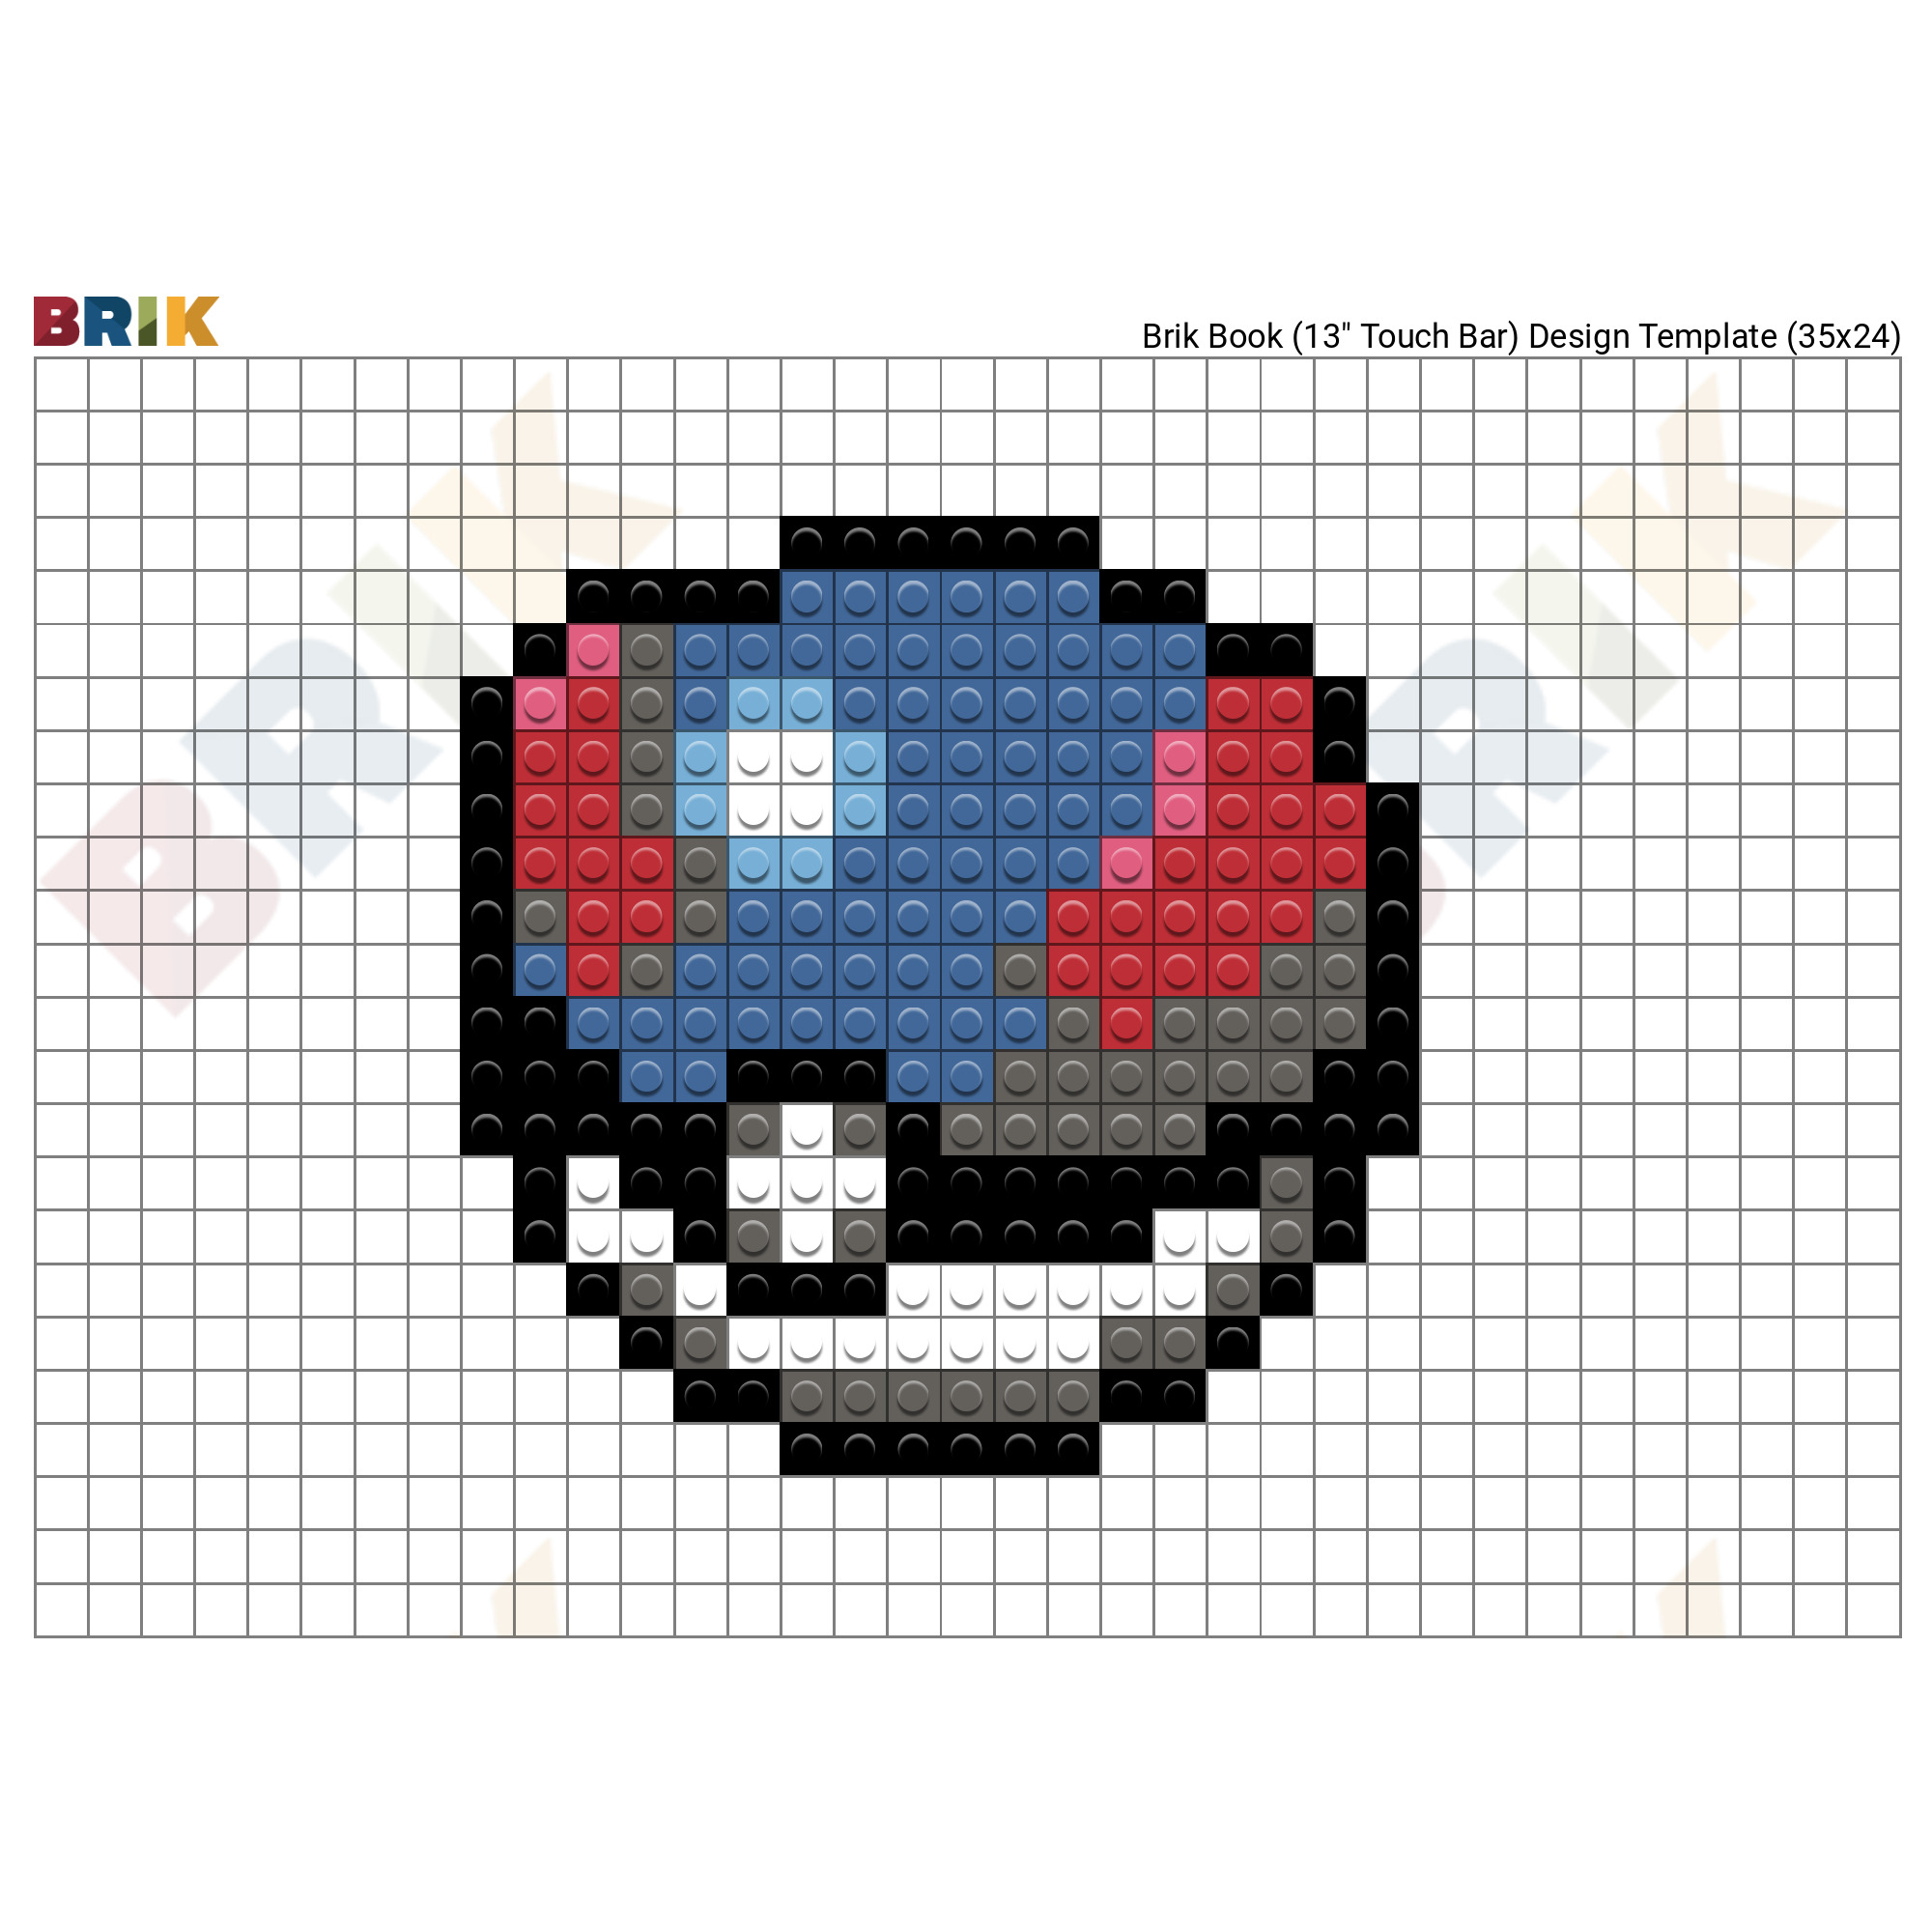 Pokeballs contest pixel art